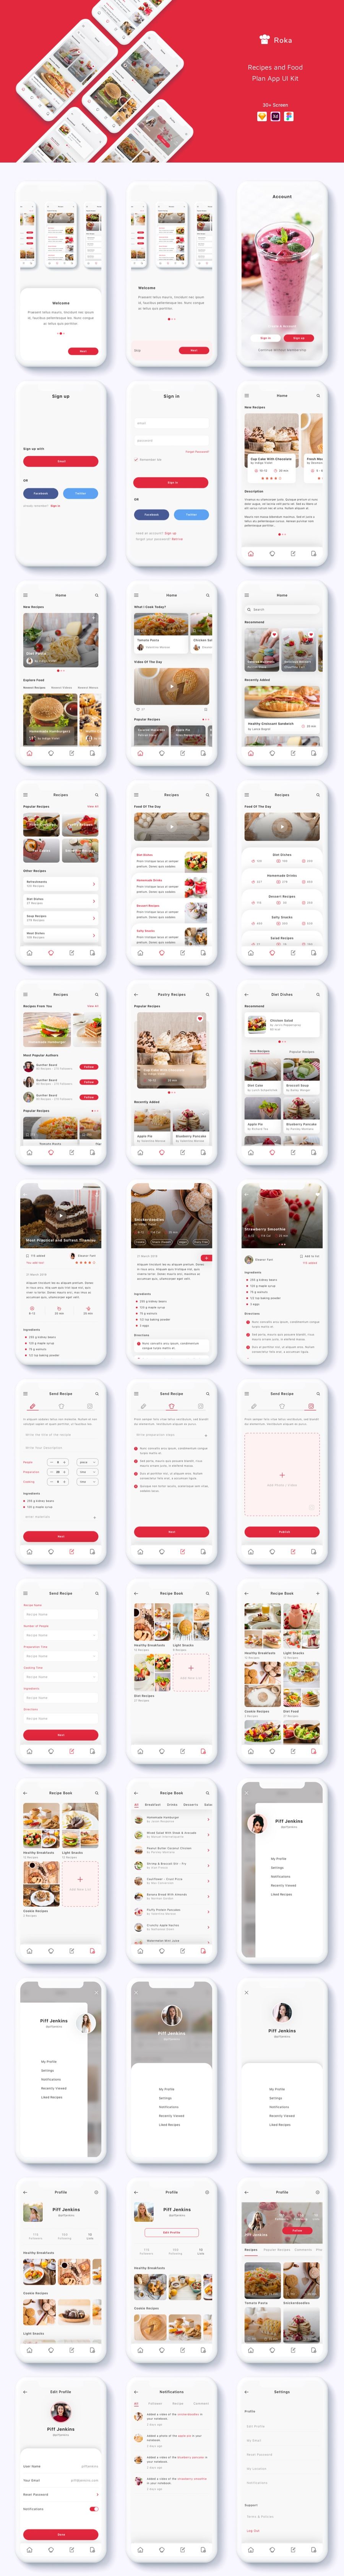 Roka - Recipes and Food Plan App UI Kit - 2